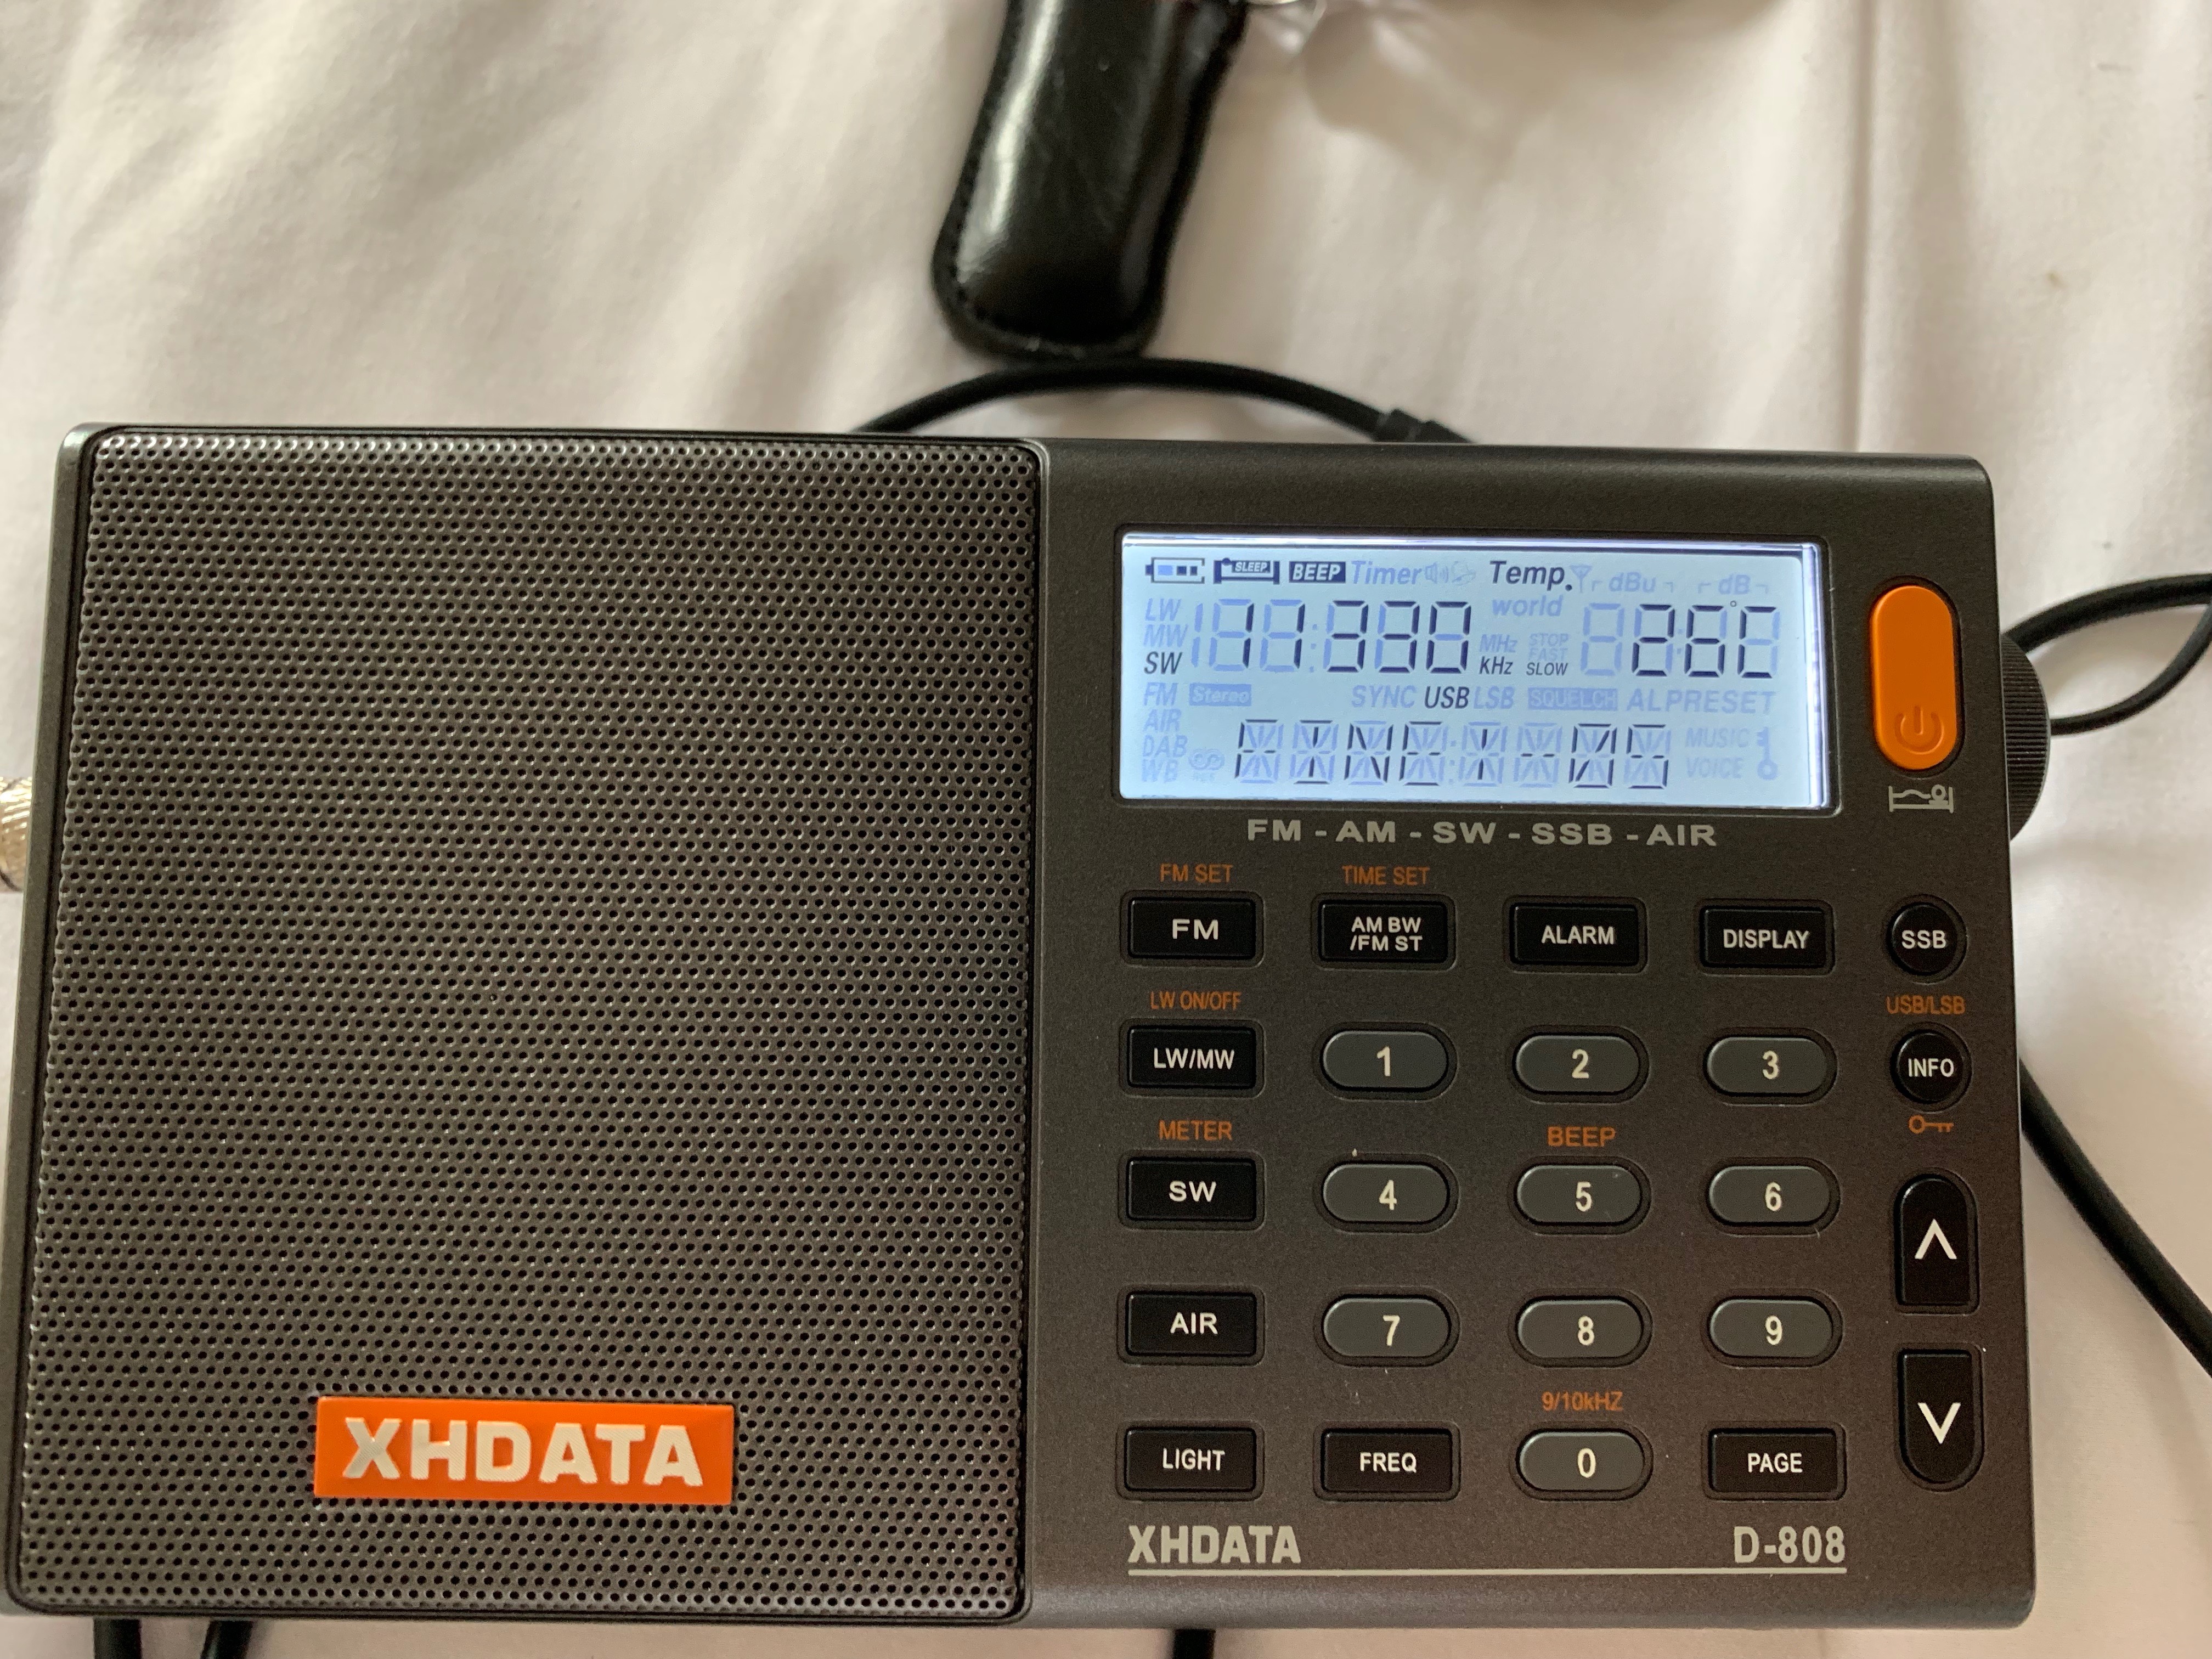 XHDATA D-808 Put Through Some Paces - John's Tech Blog